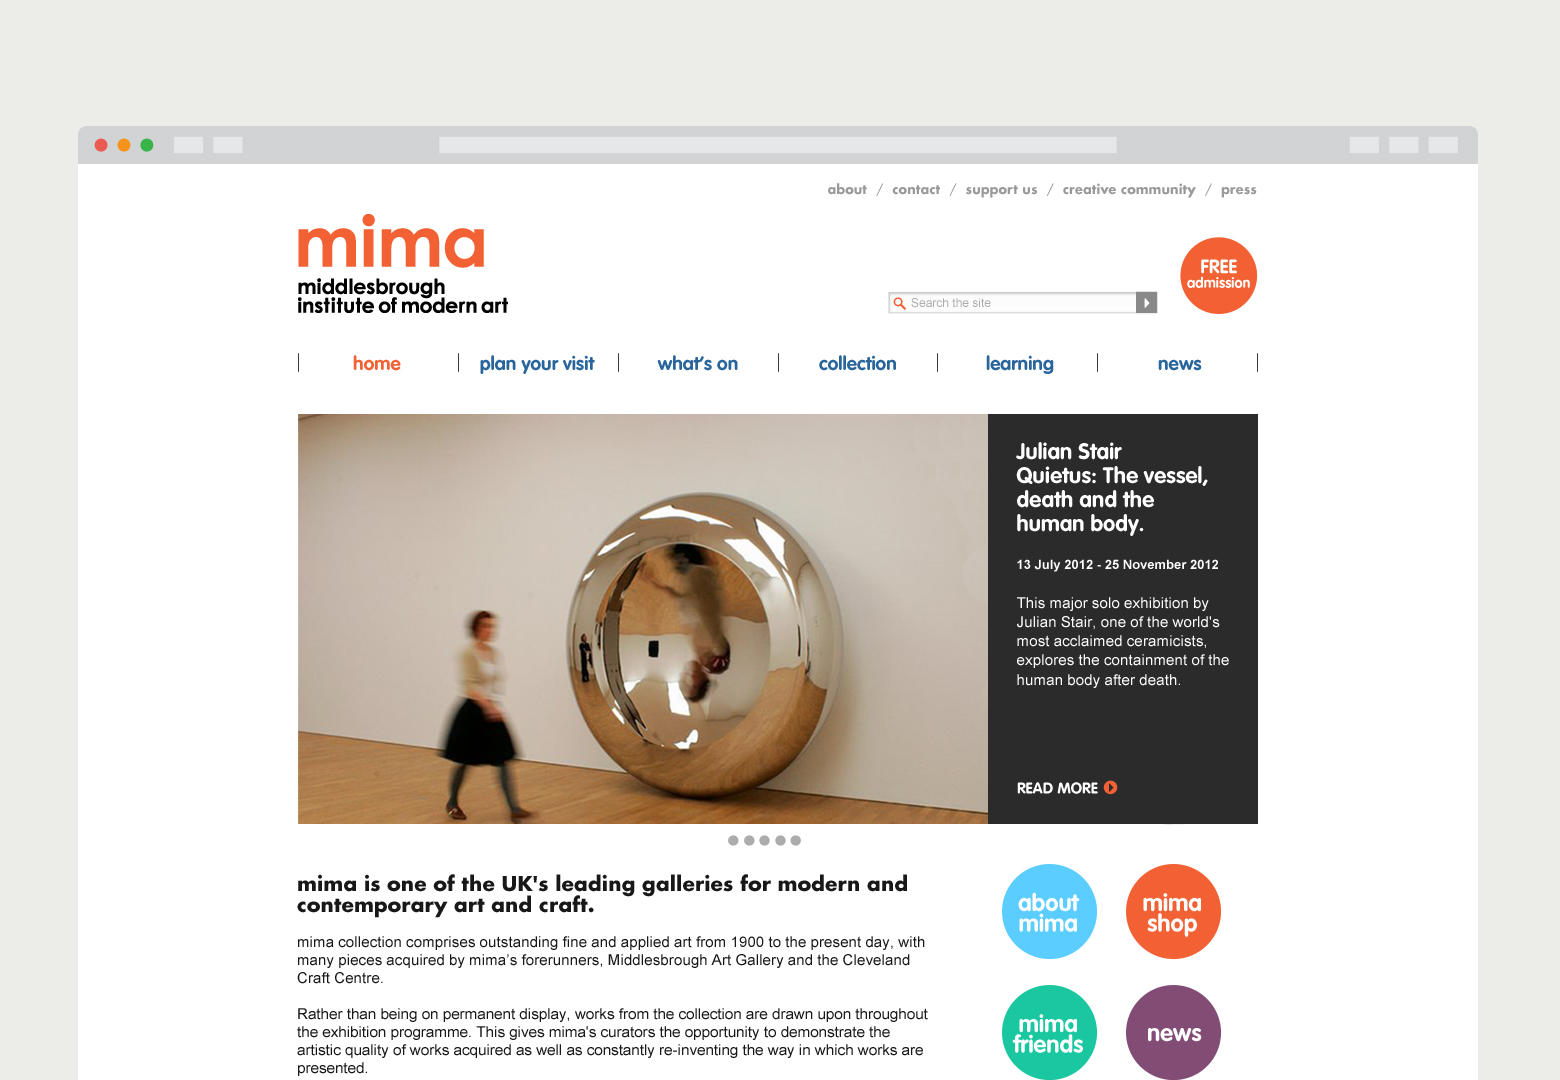 mima (Middlesbrough Institute of Modern Art)